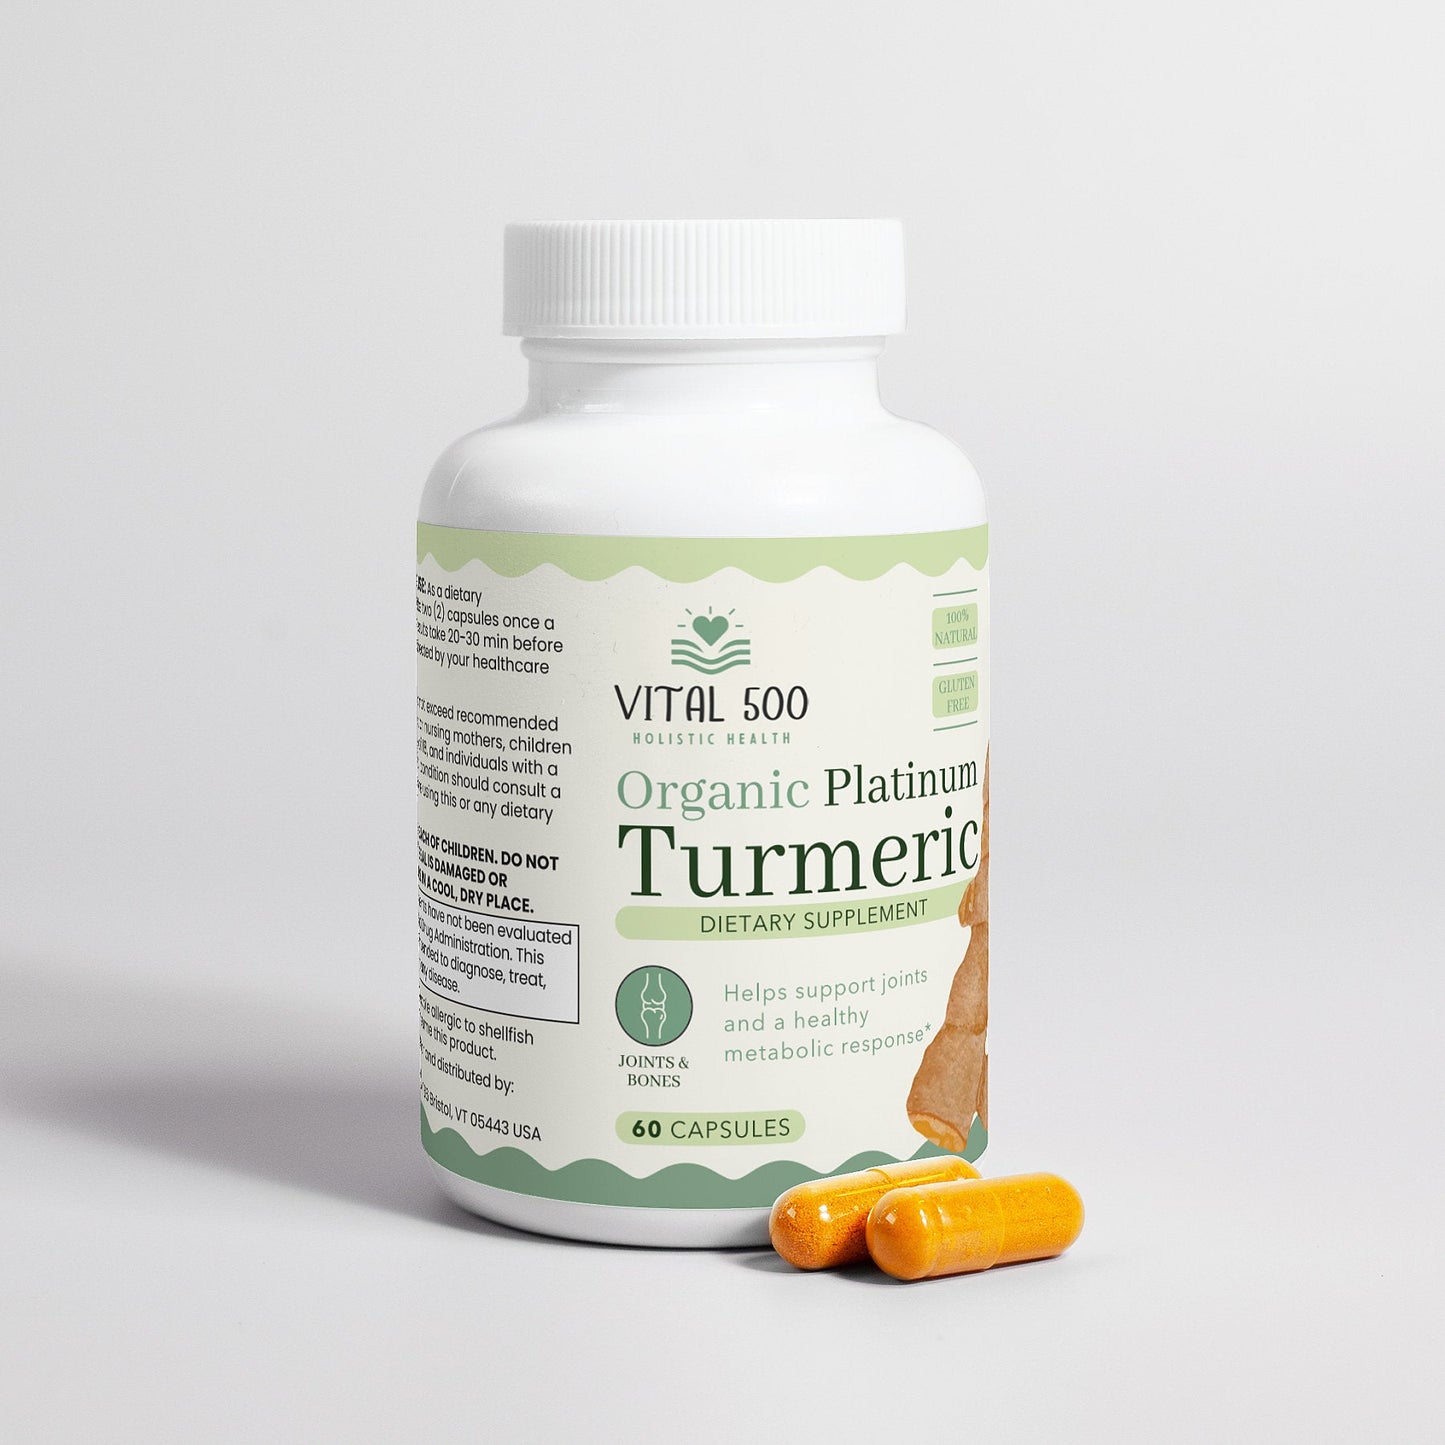 Turmeric: Anti-Inflammatory Superfood